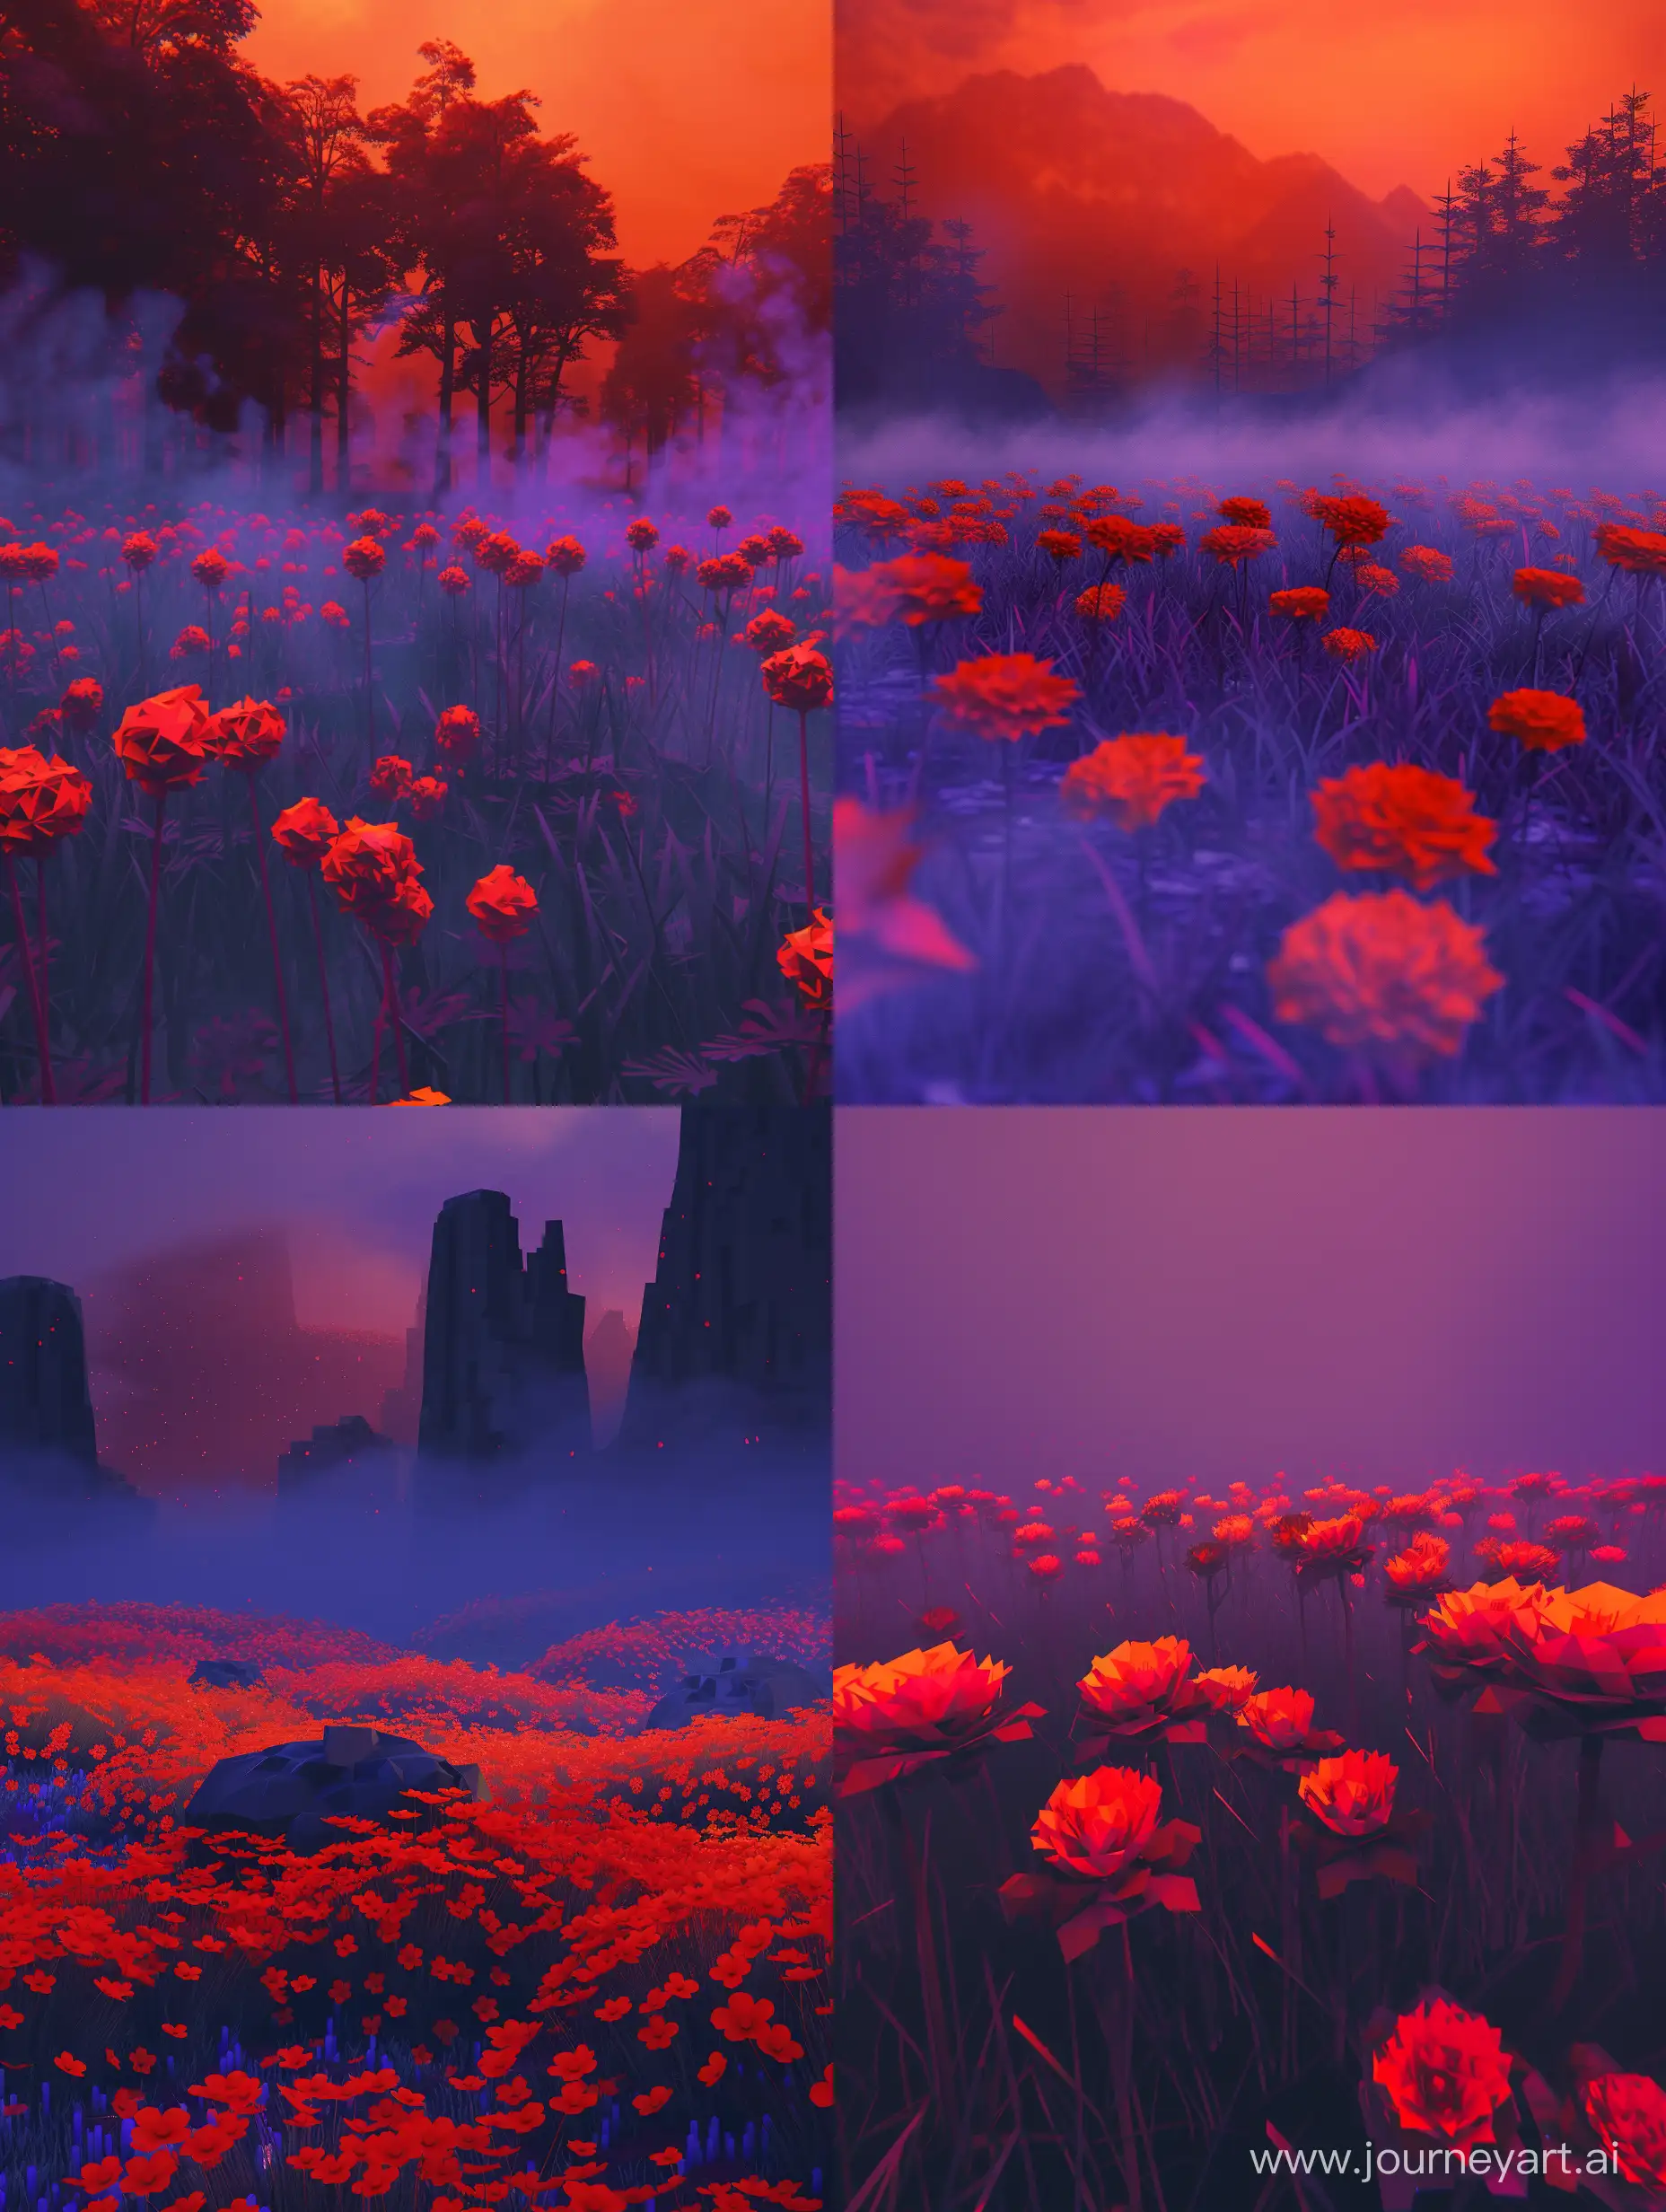 Enchanting-1990s-Nostalgia-Nighttime-Flower-Field-Landscape-in-Low-Poly-Digital-Glitch